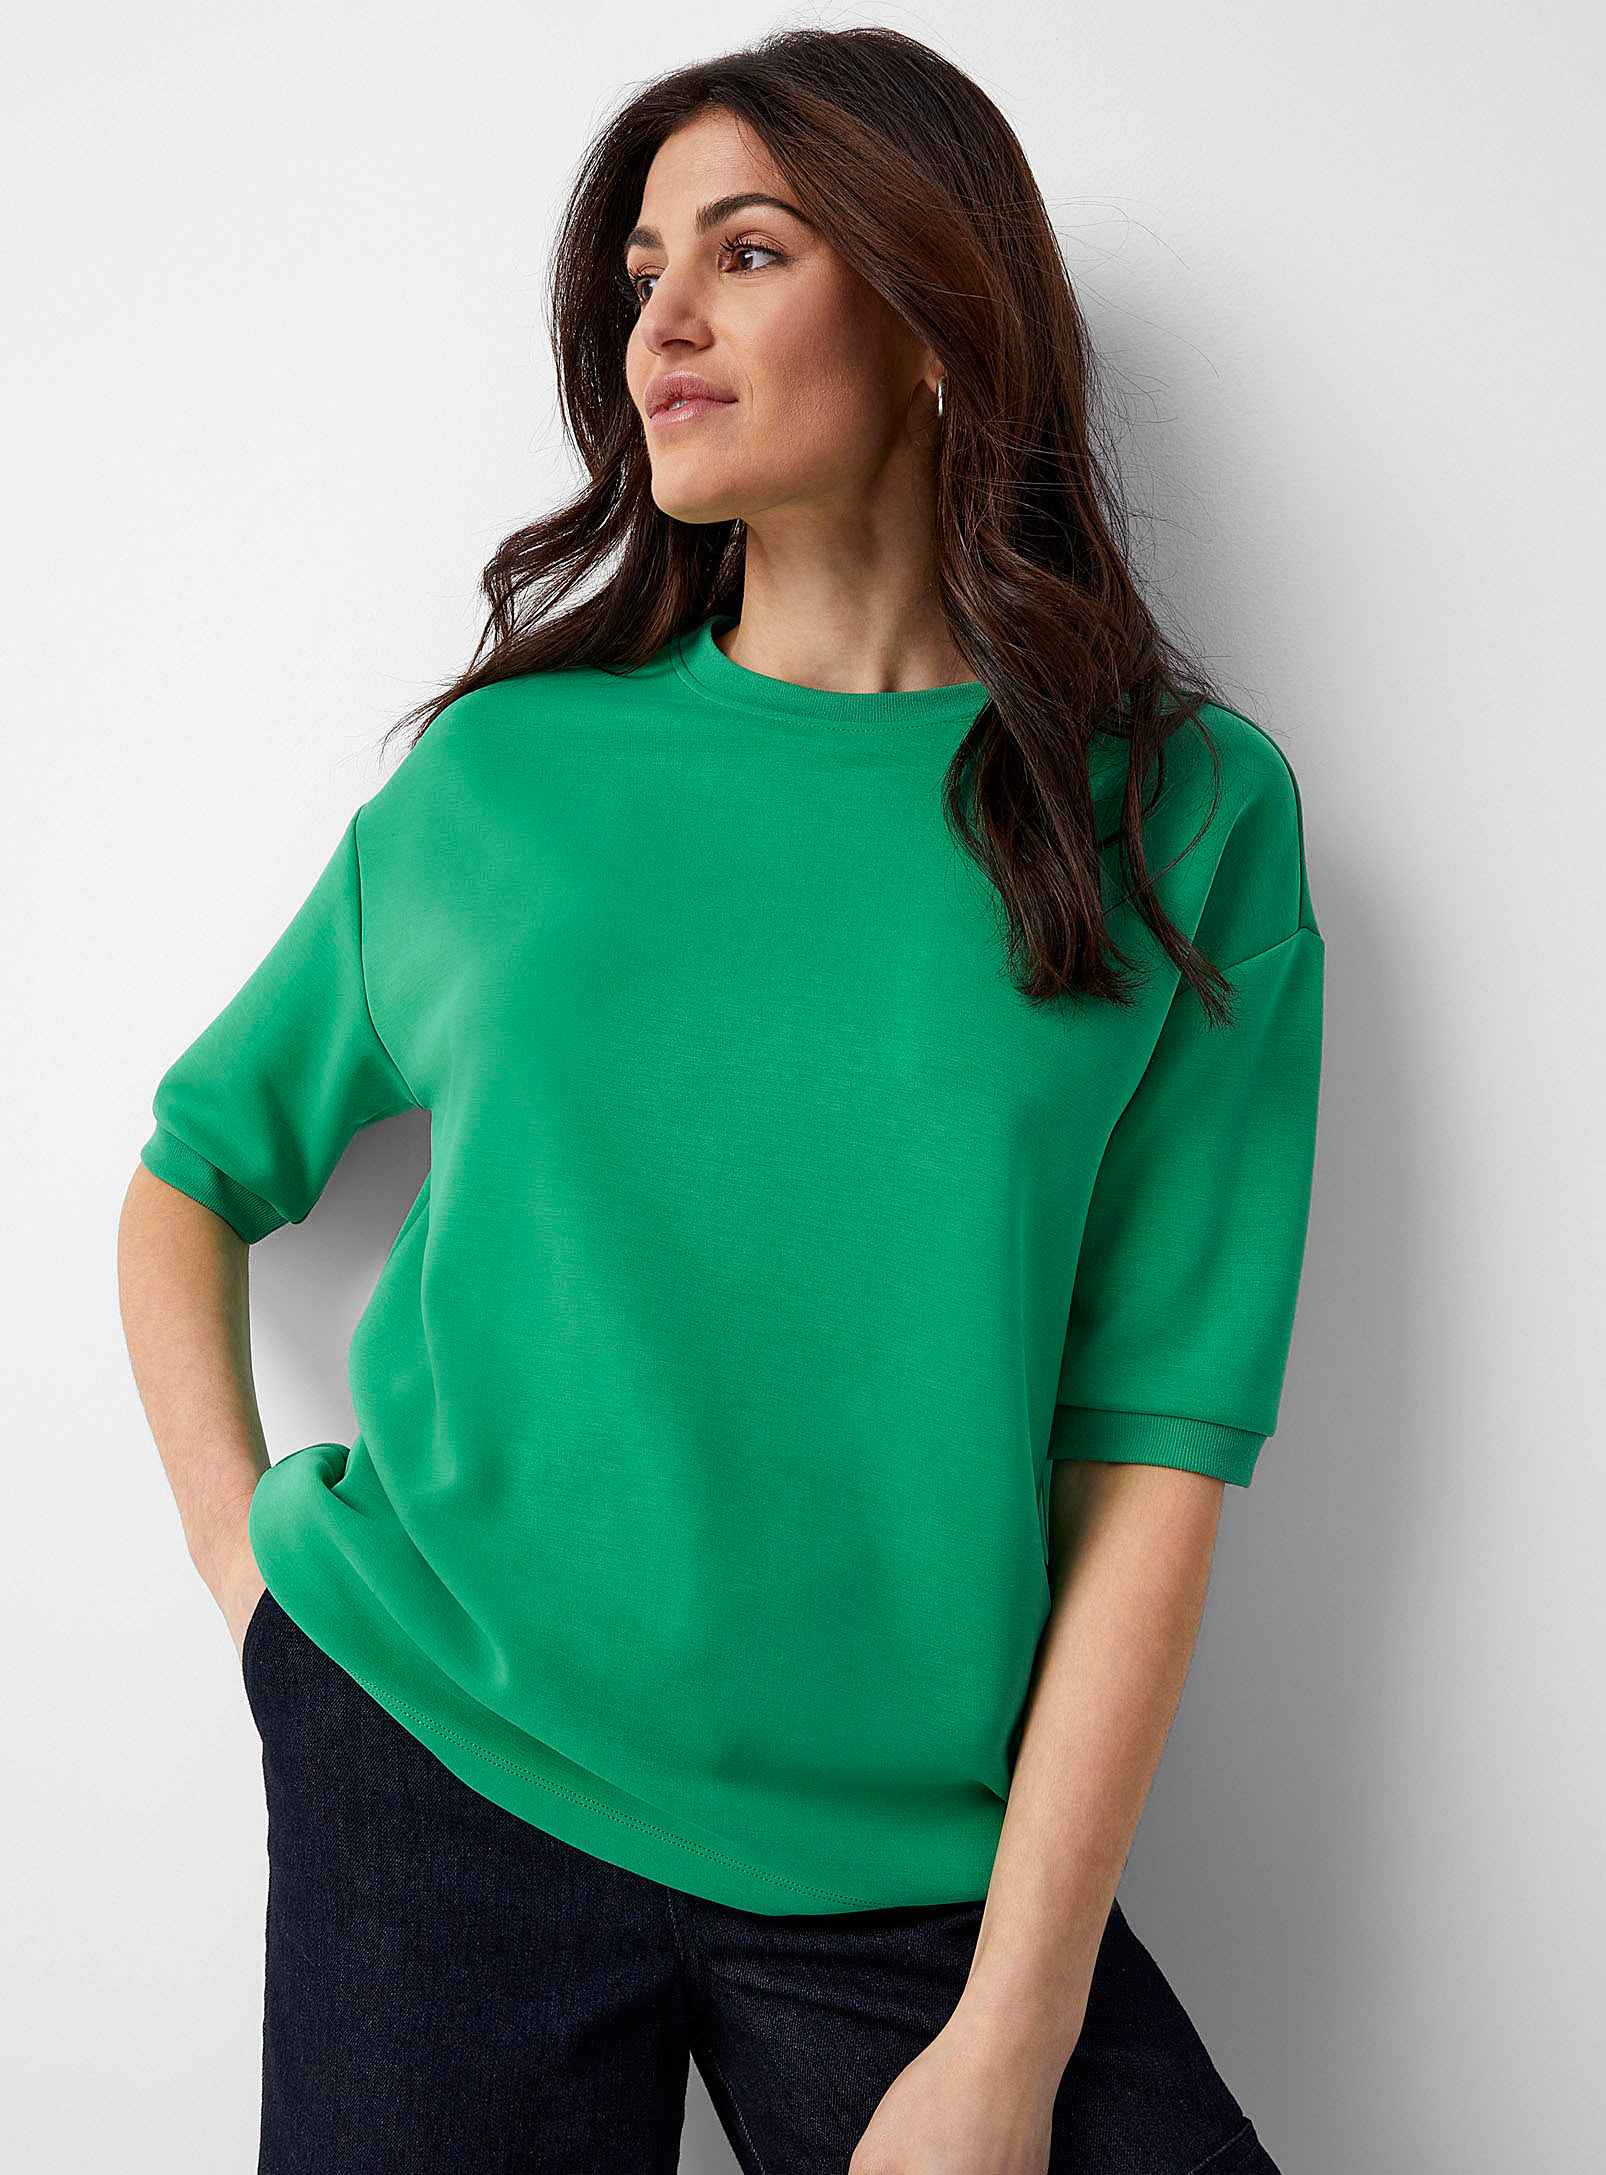 Contemporaine Elbow-length-sleeve Peachskin Sweatshirt In Bottle Green